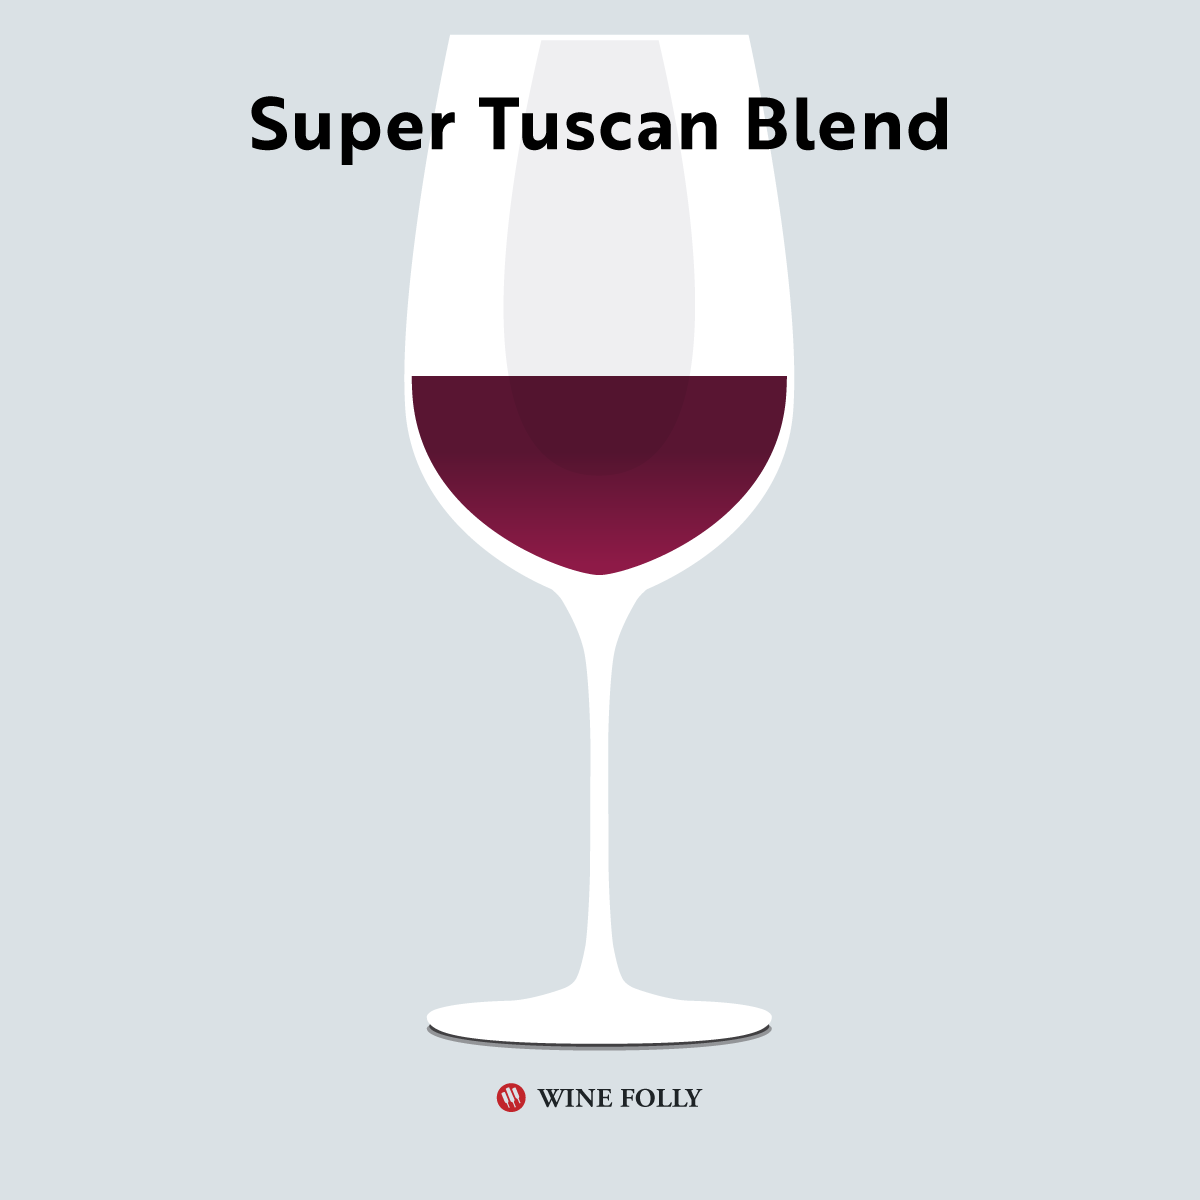 Taurė „Super Tuscan Blend“ vyno iš „Wine Folly“